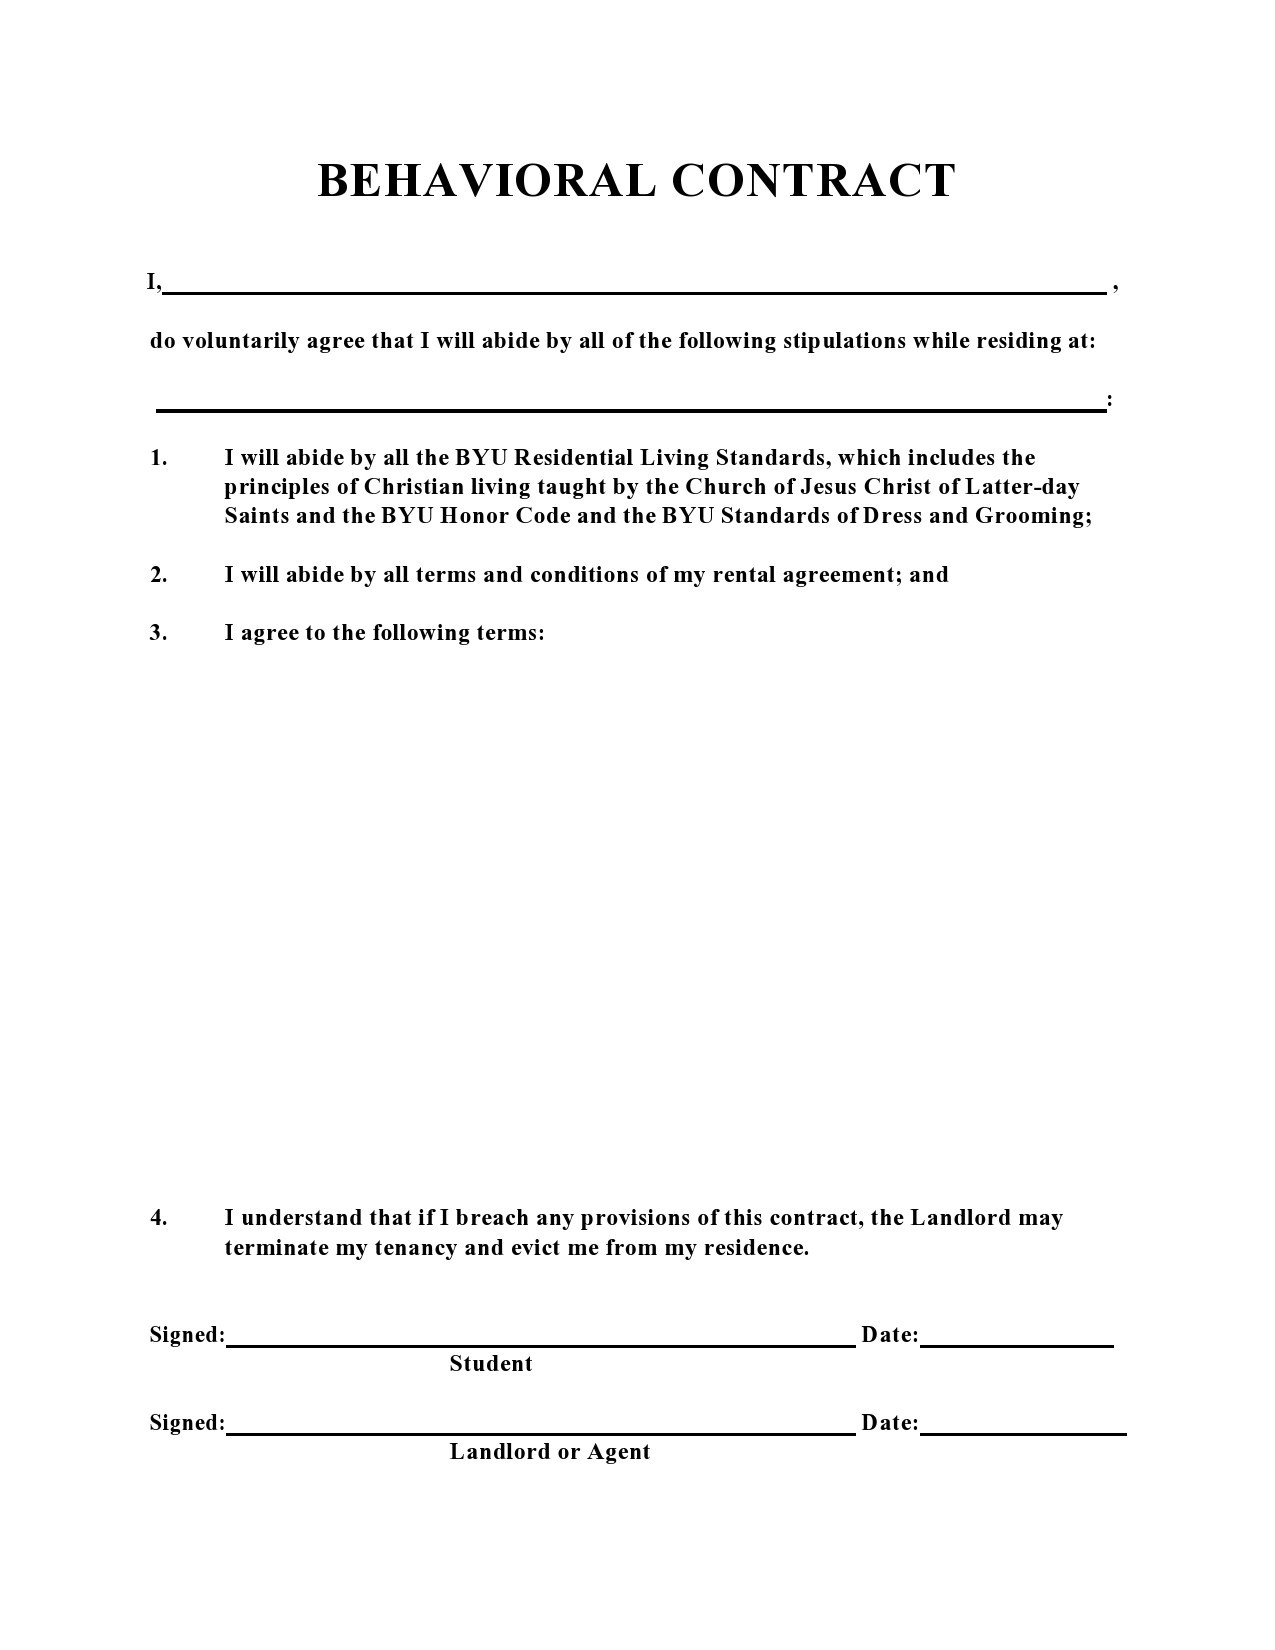 Free behavior contract template 24